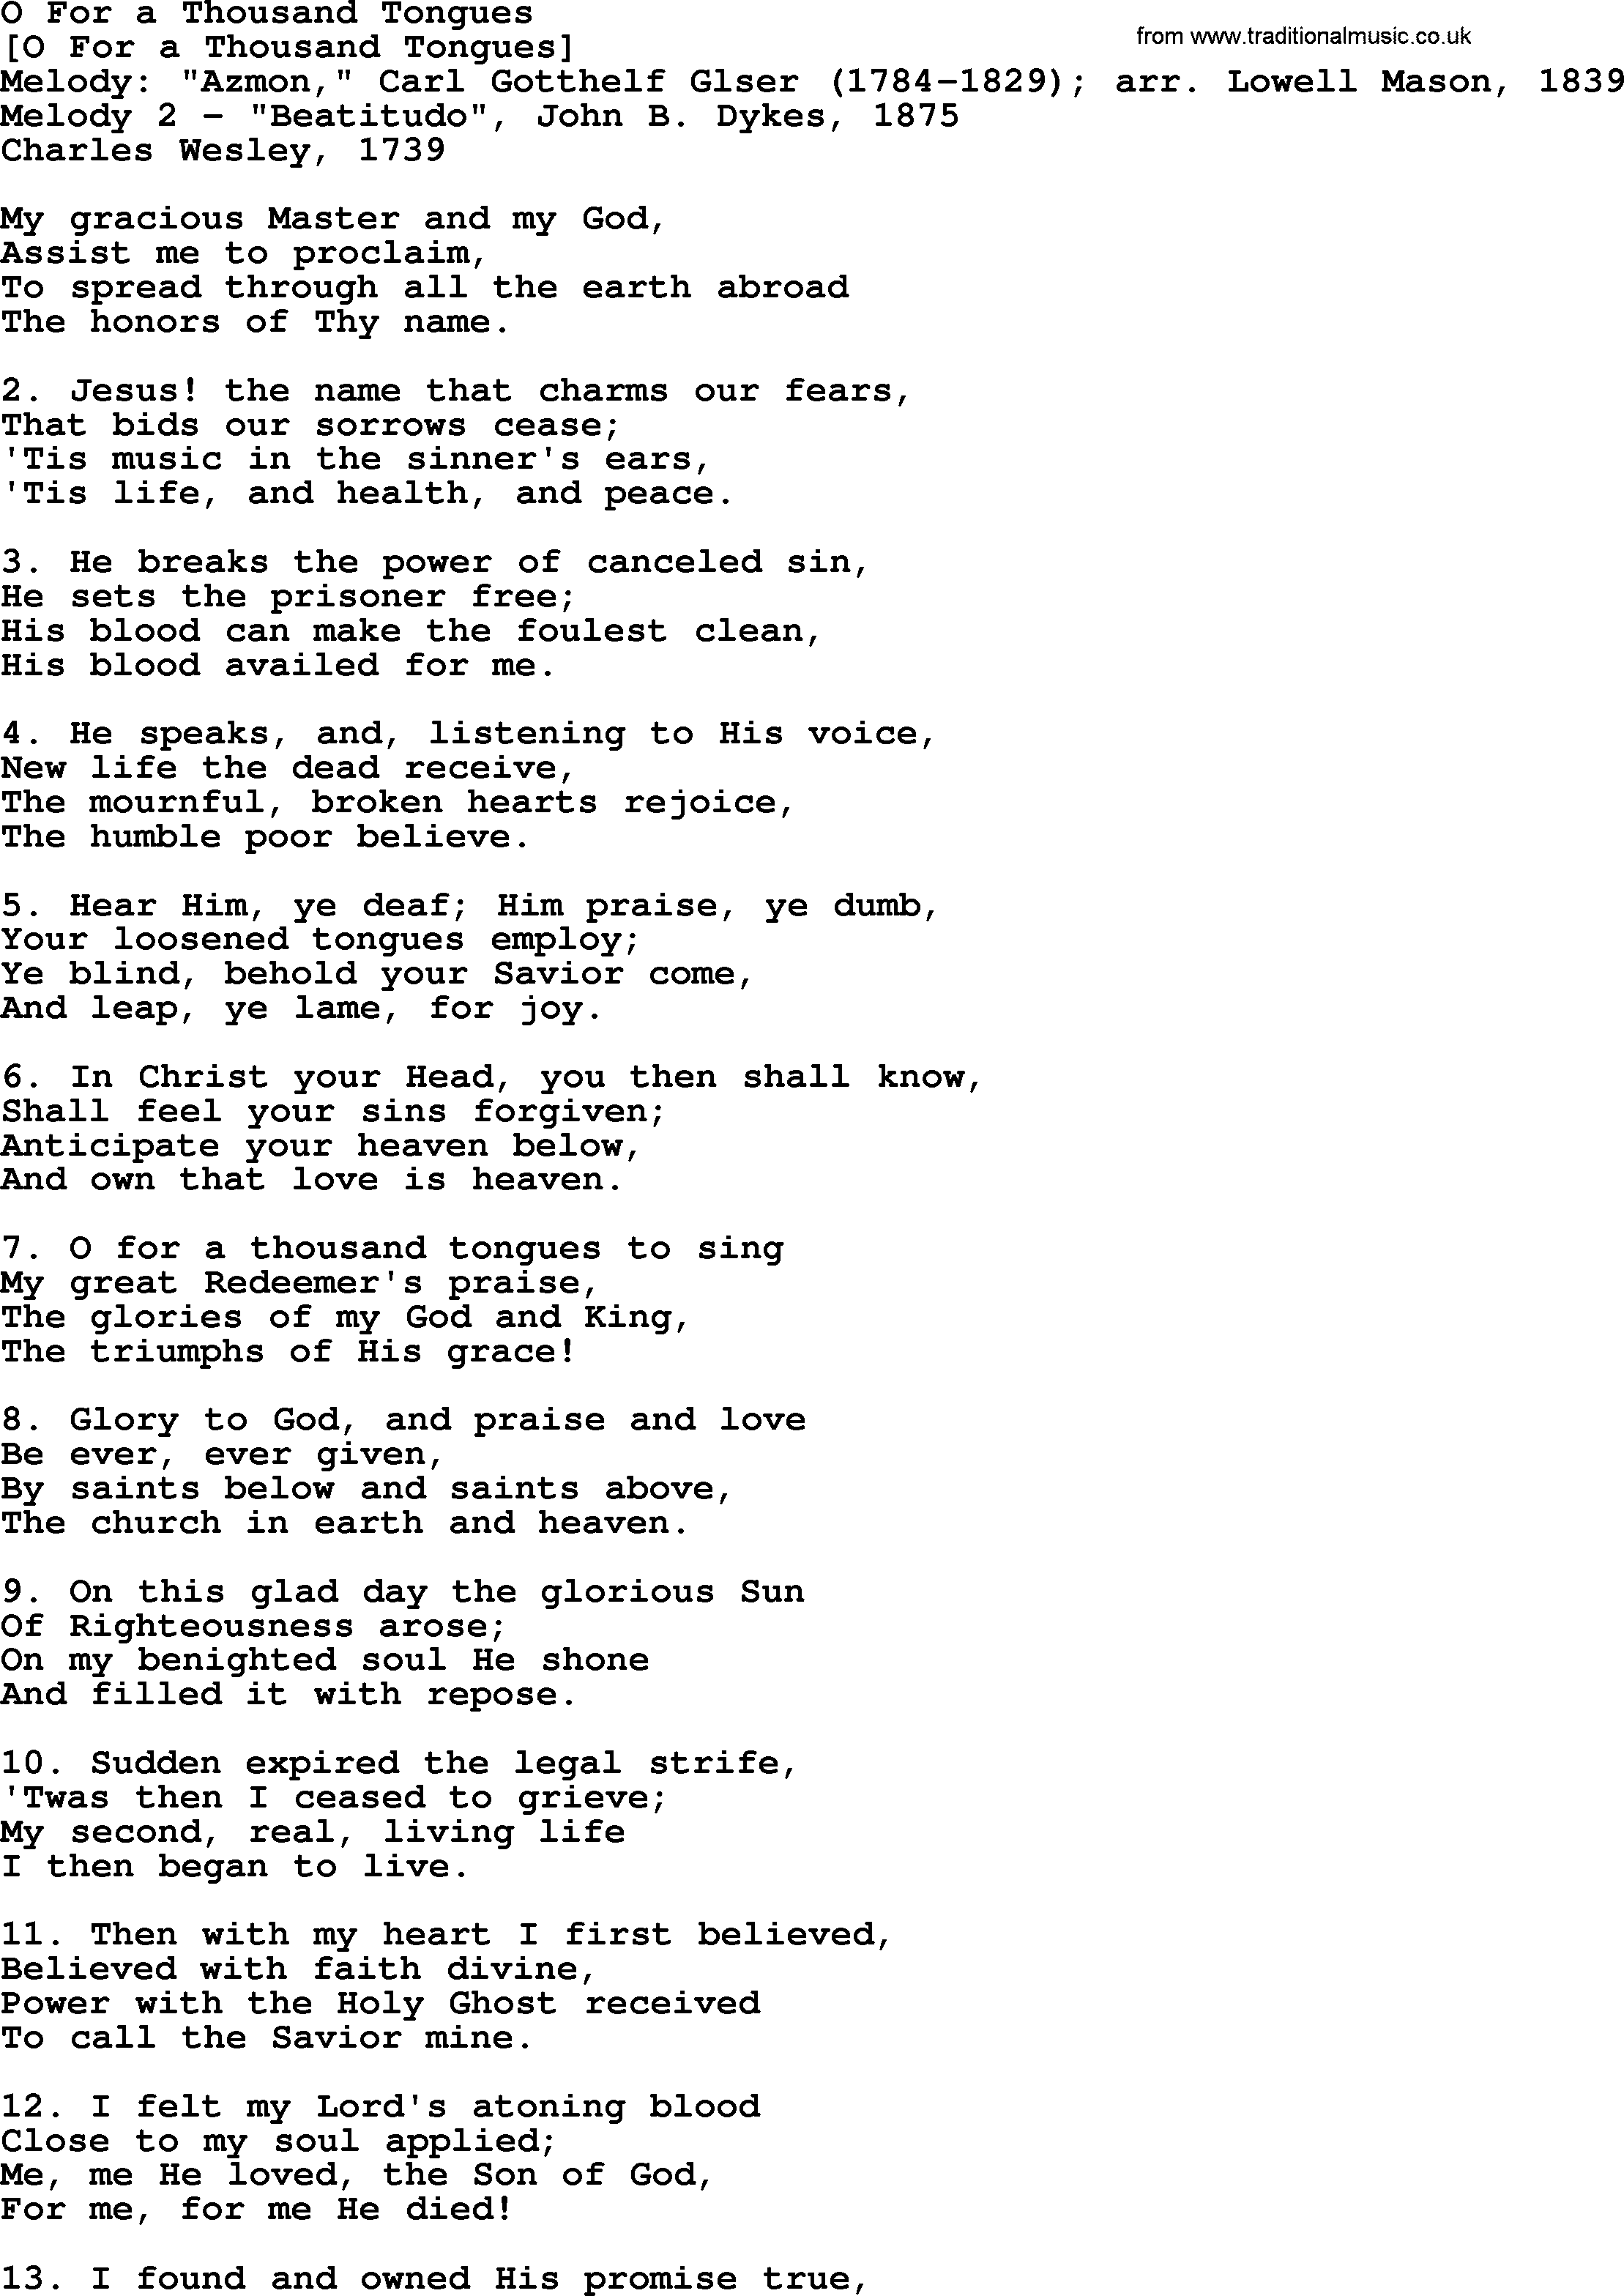 Old English Song: O For A Thousand Tongues lyrics